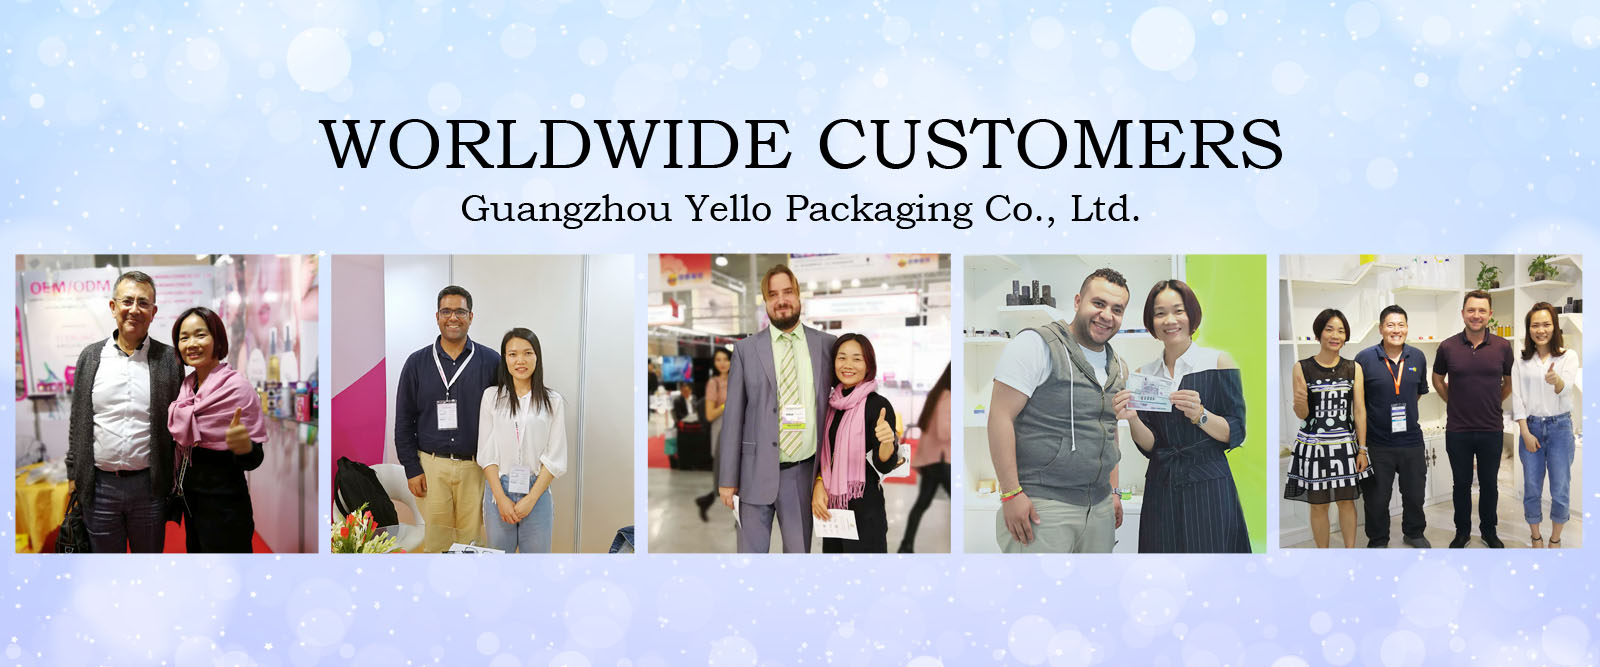 Worldwide Customers - Yello Packaging